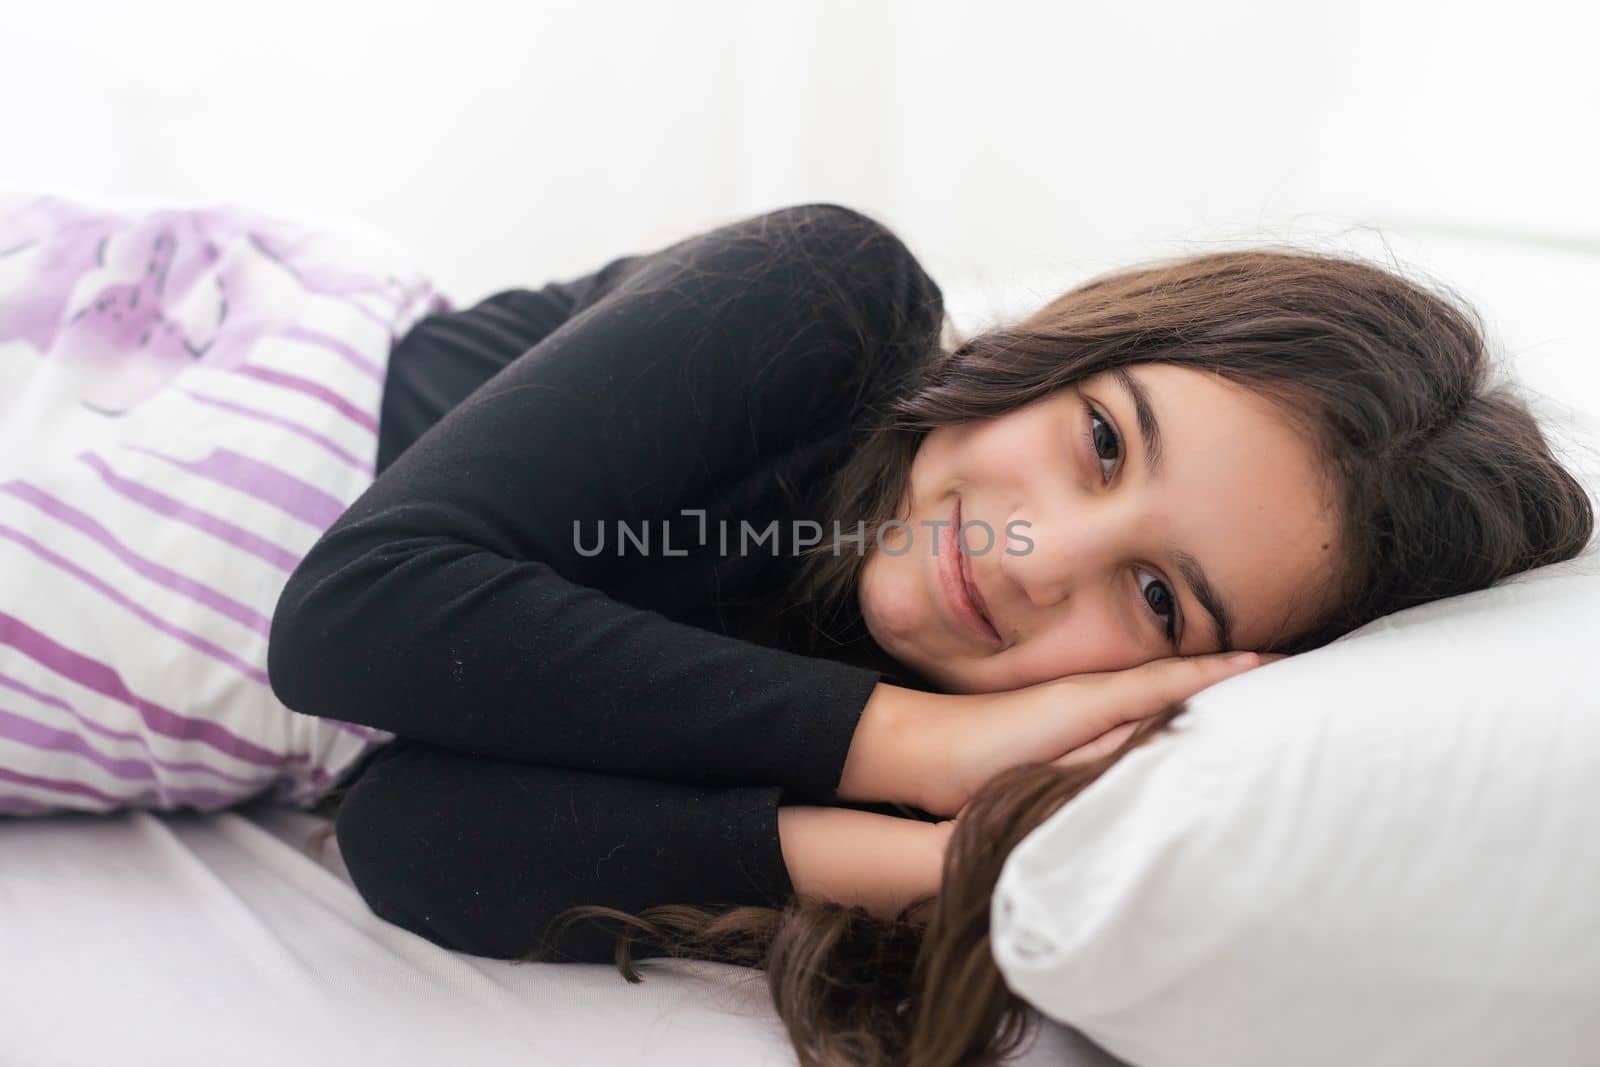 teenage girl in bed. resting, good night sleep concept. by Andelov13